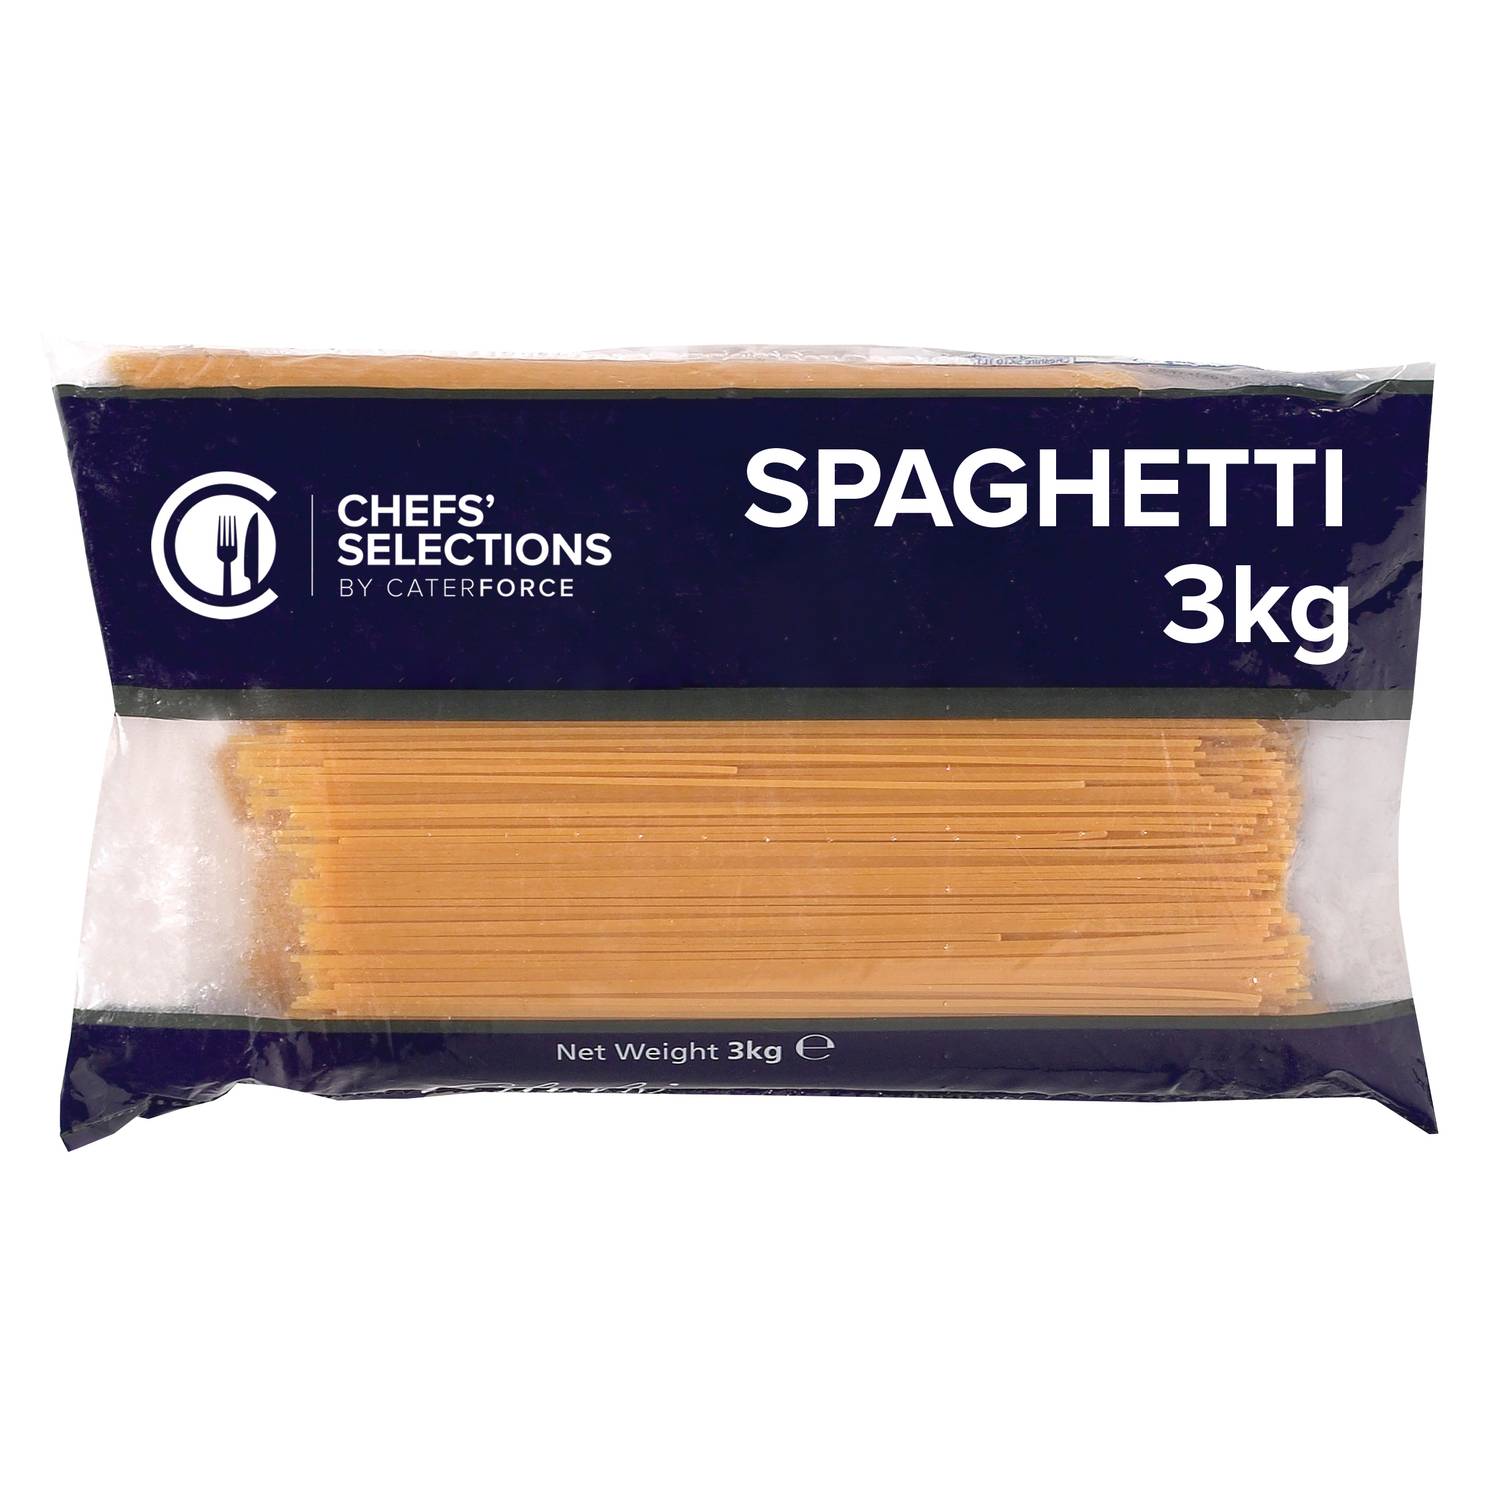 Chefs’ Selections Spaghetti Pasta (4 x 3kg)